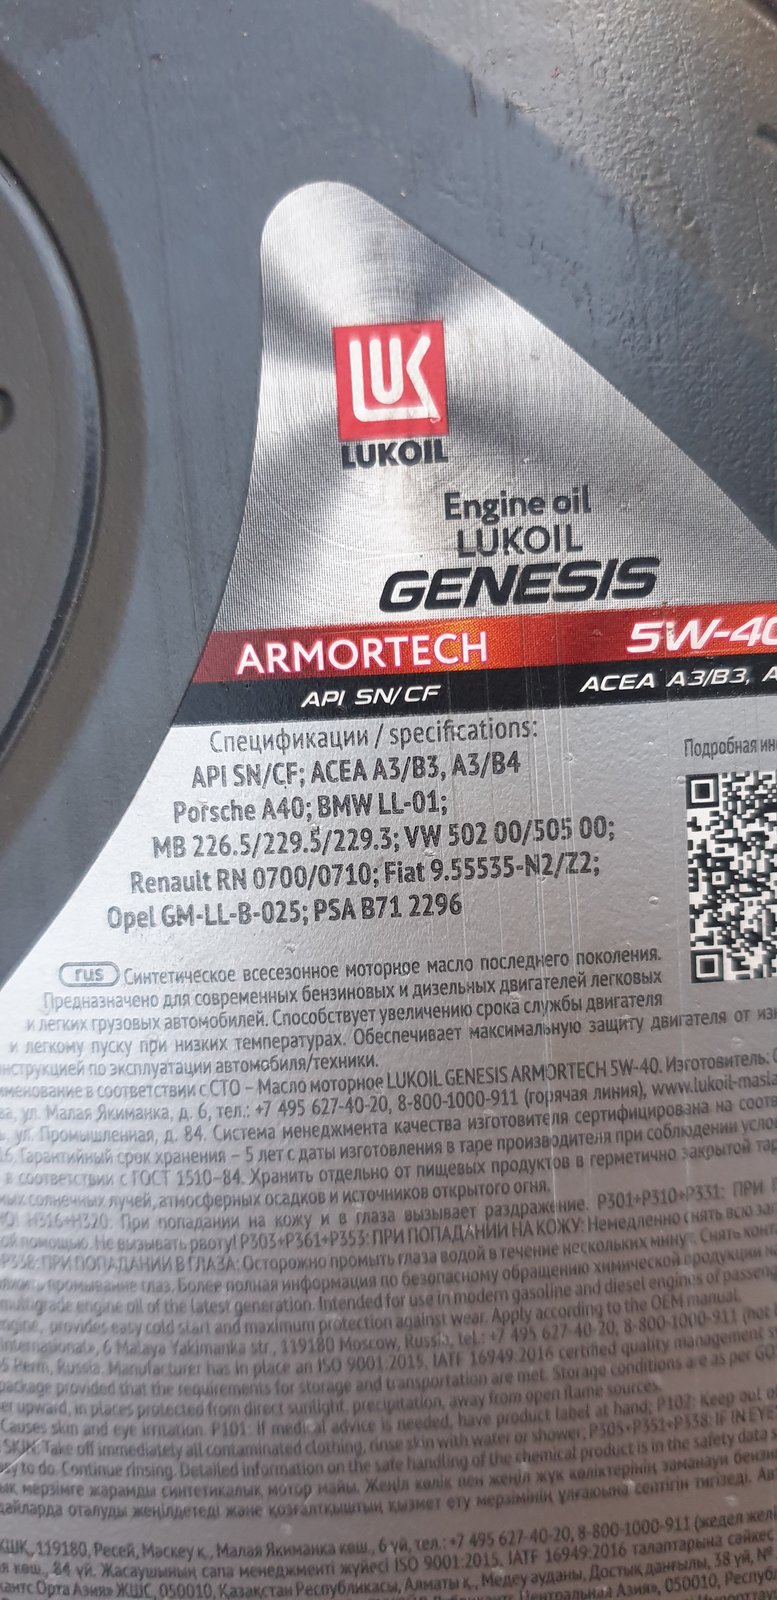 Lukoil Genesis Armortech 5w-40 GM. Лукойл Генезис 5-40 502 505. Лукойл Генезис 5w40 допуск 502-505. Масло Лукойл VW 502 5w40.